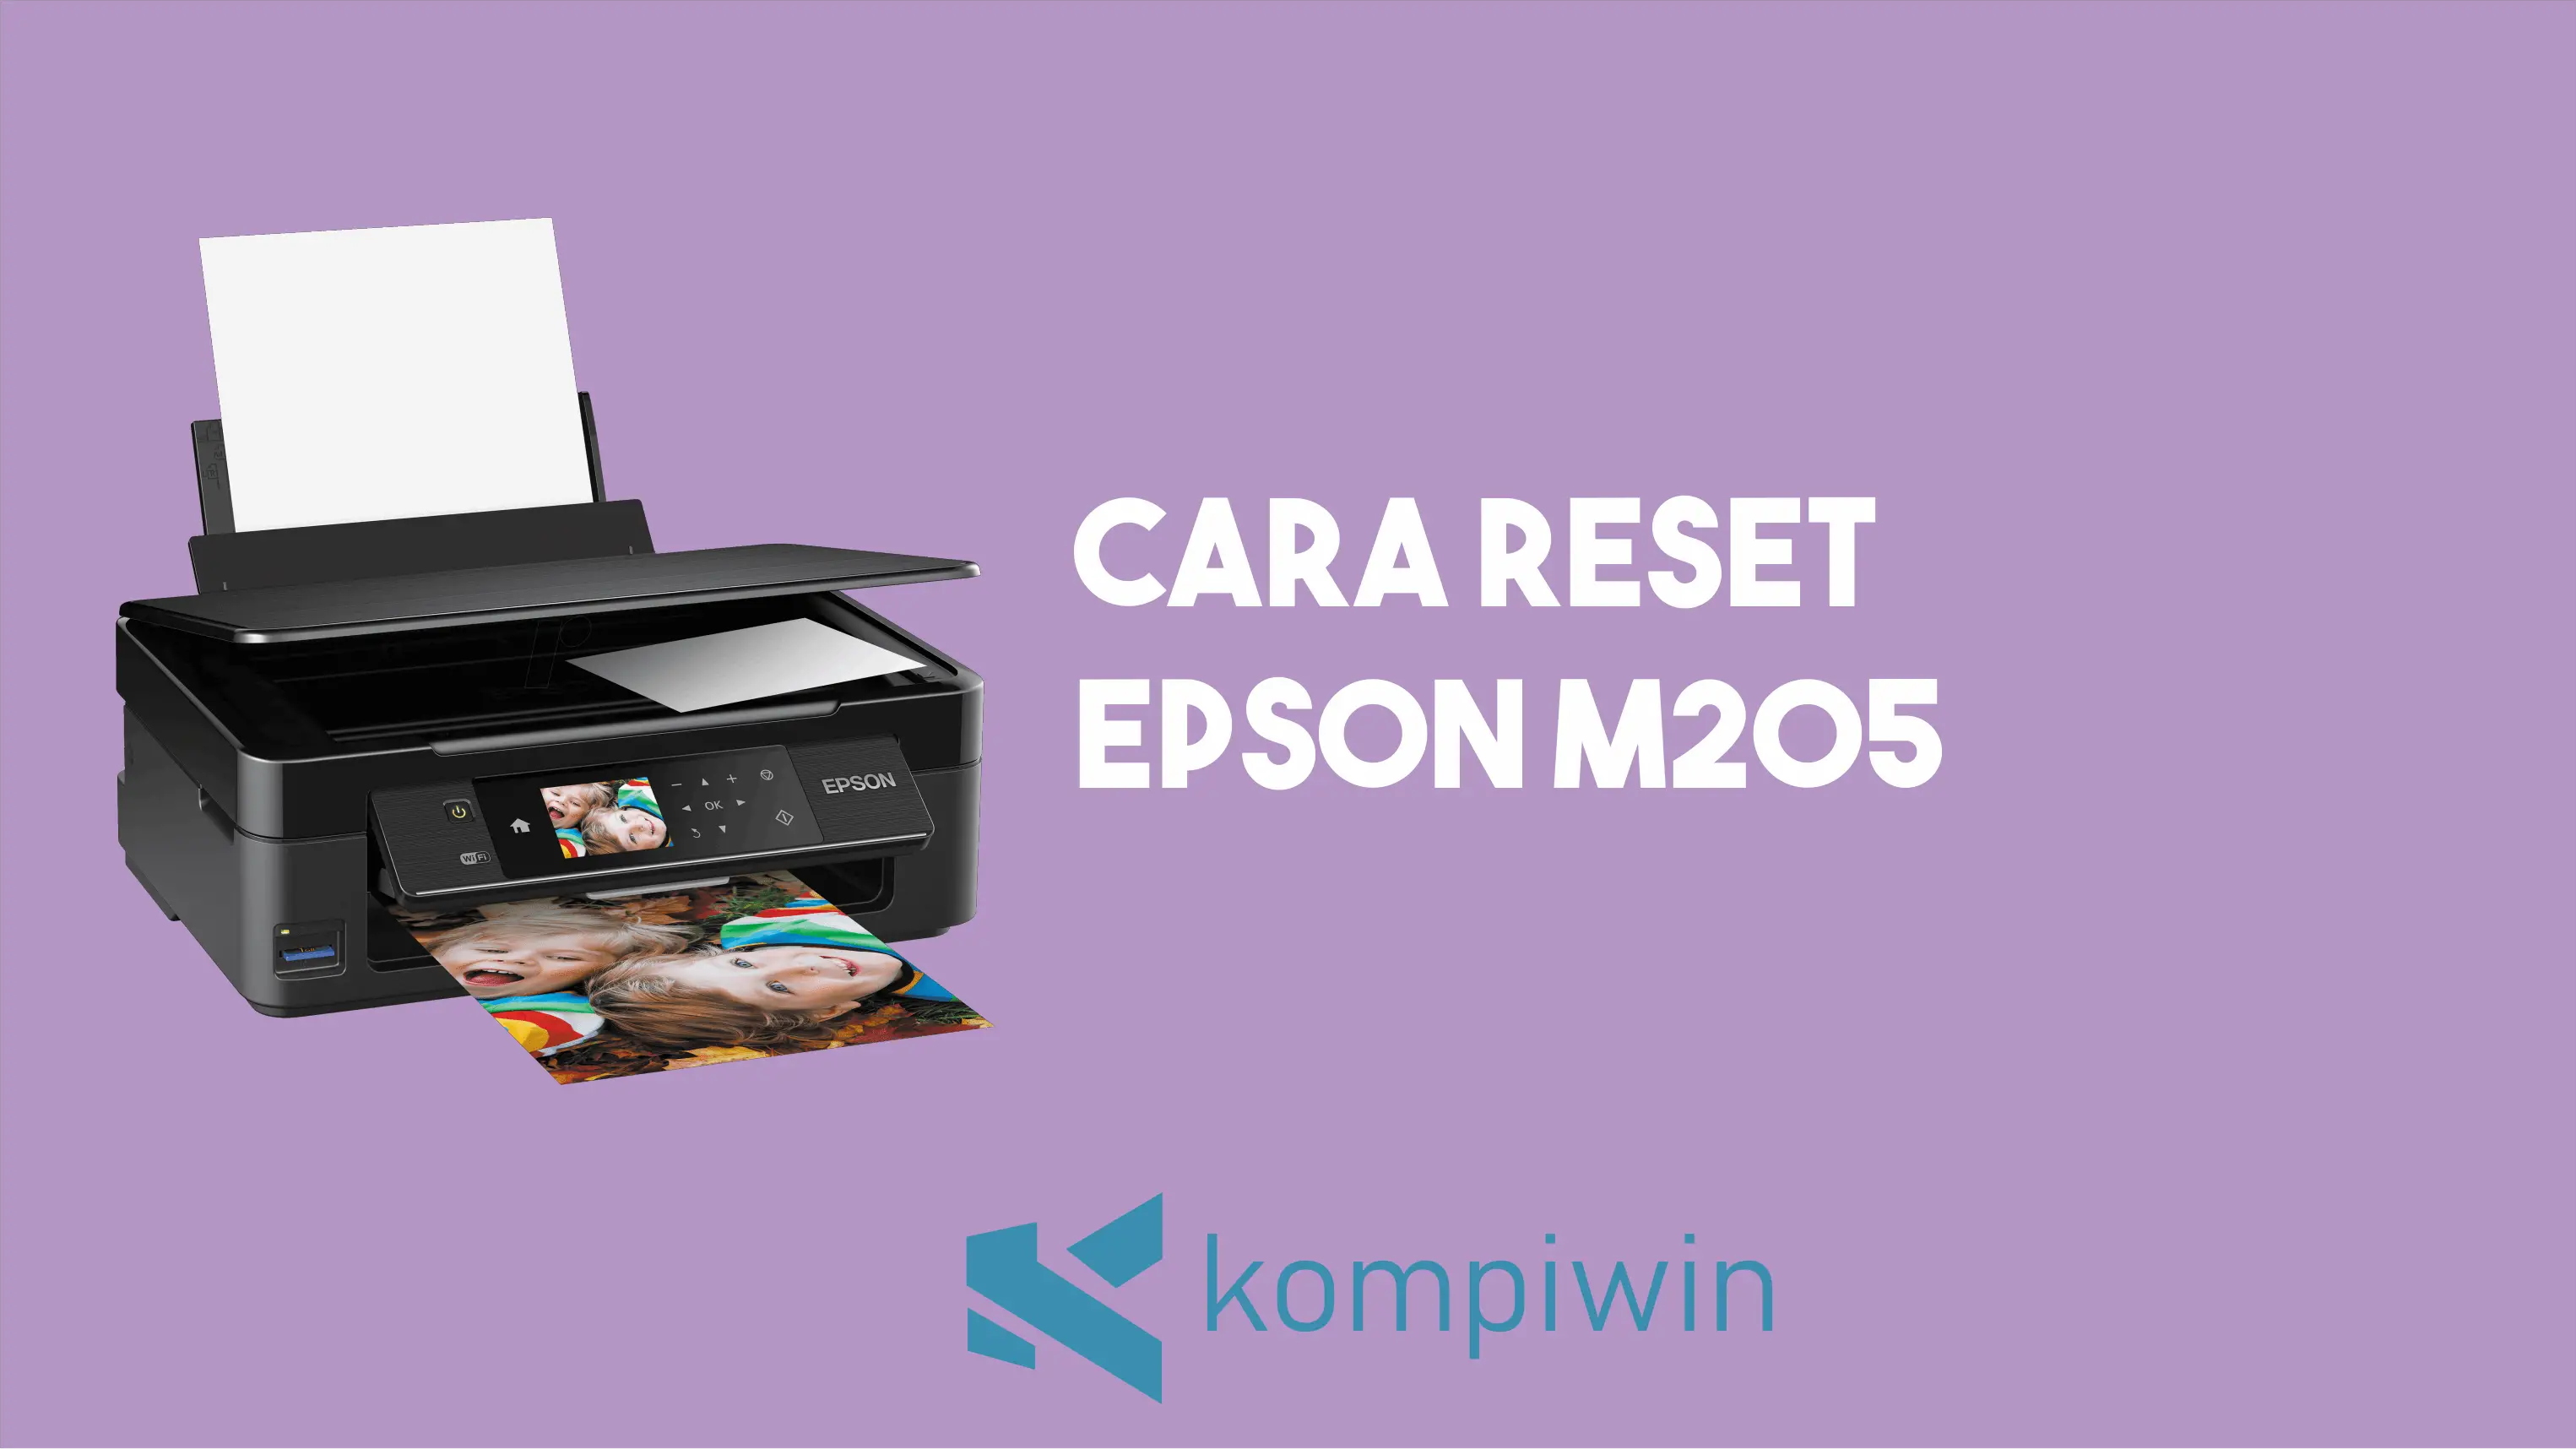 Cara Reset Epson M205